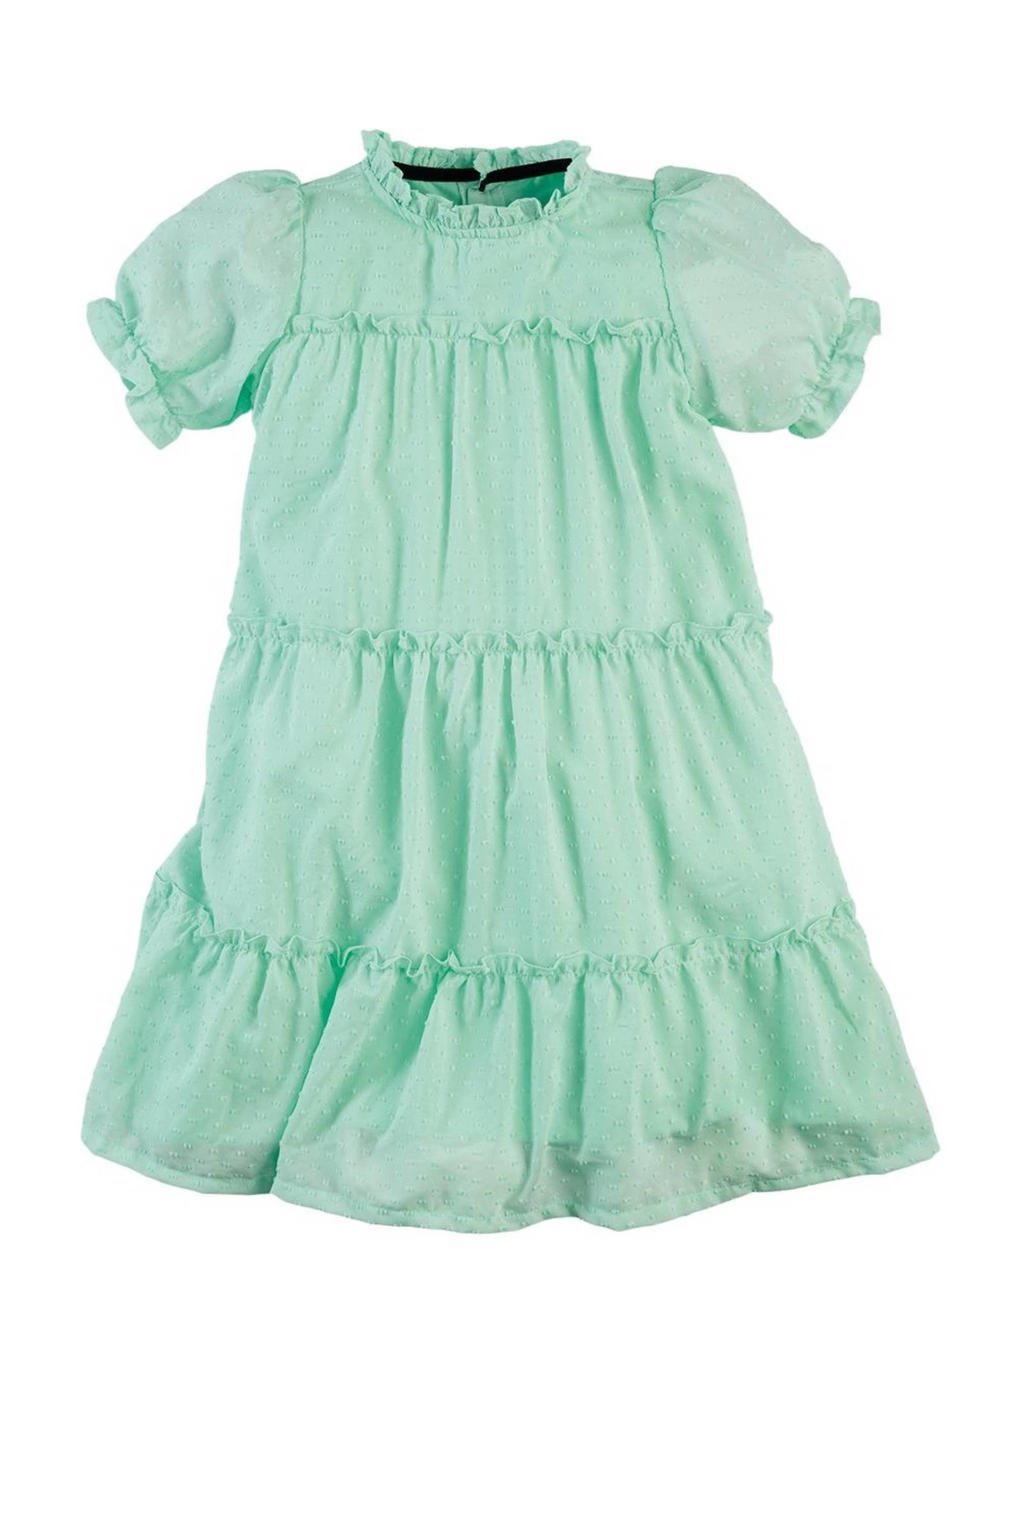 Groene meisjes Z8 jurk Faye van polyester met korte mouwen, ronde hals, knoopsluiting en volant